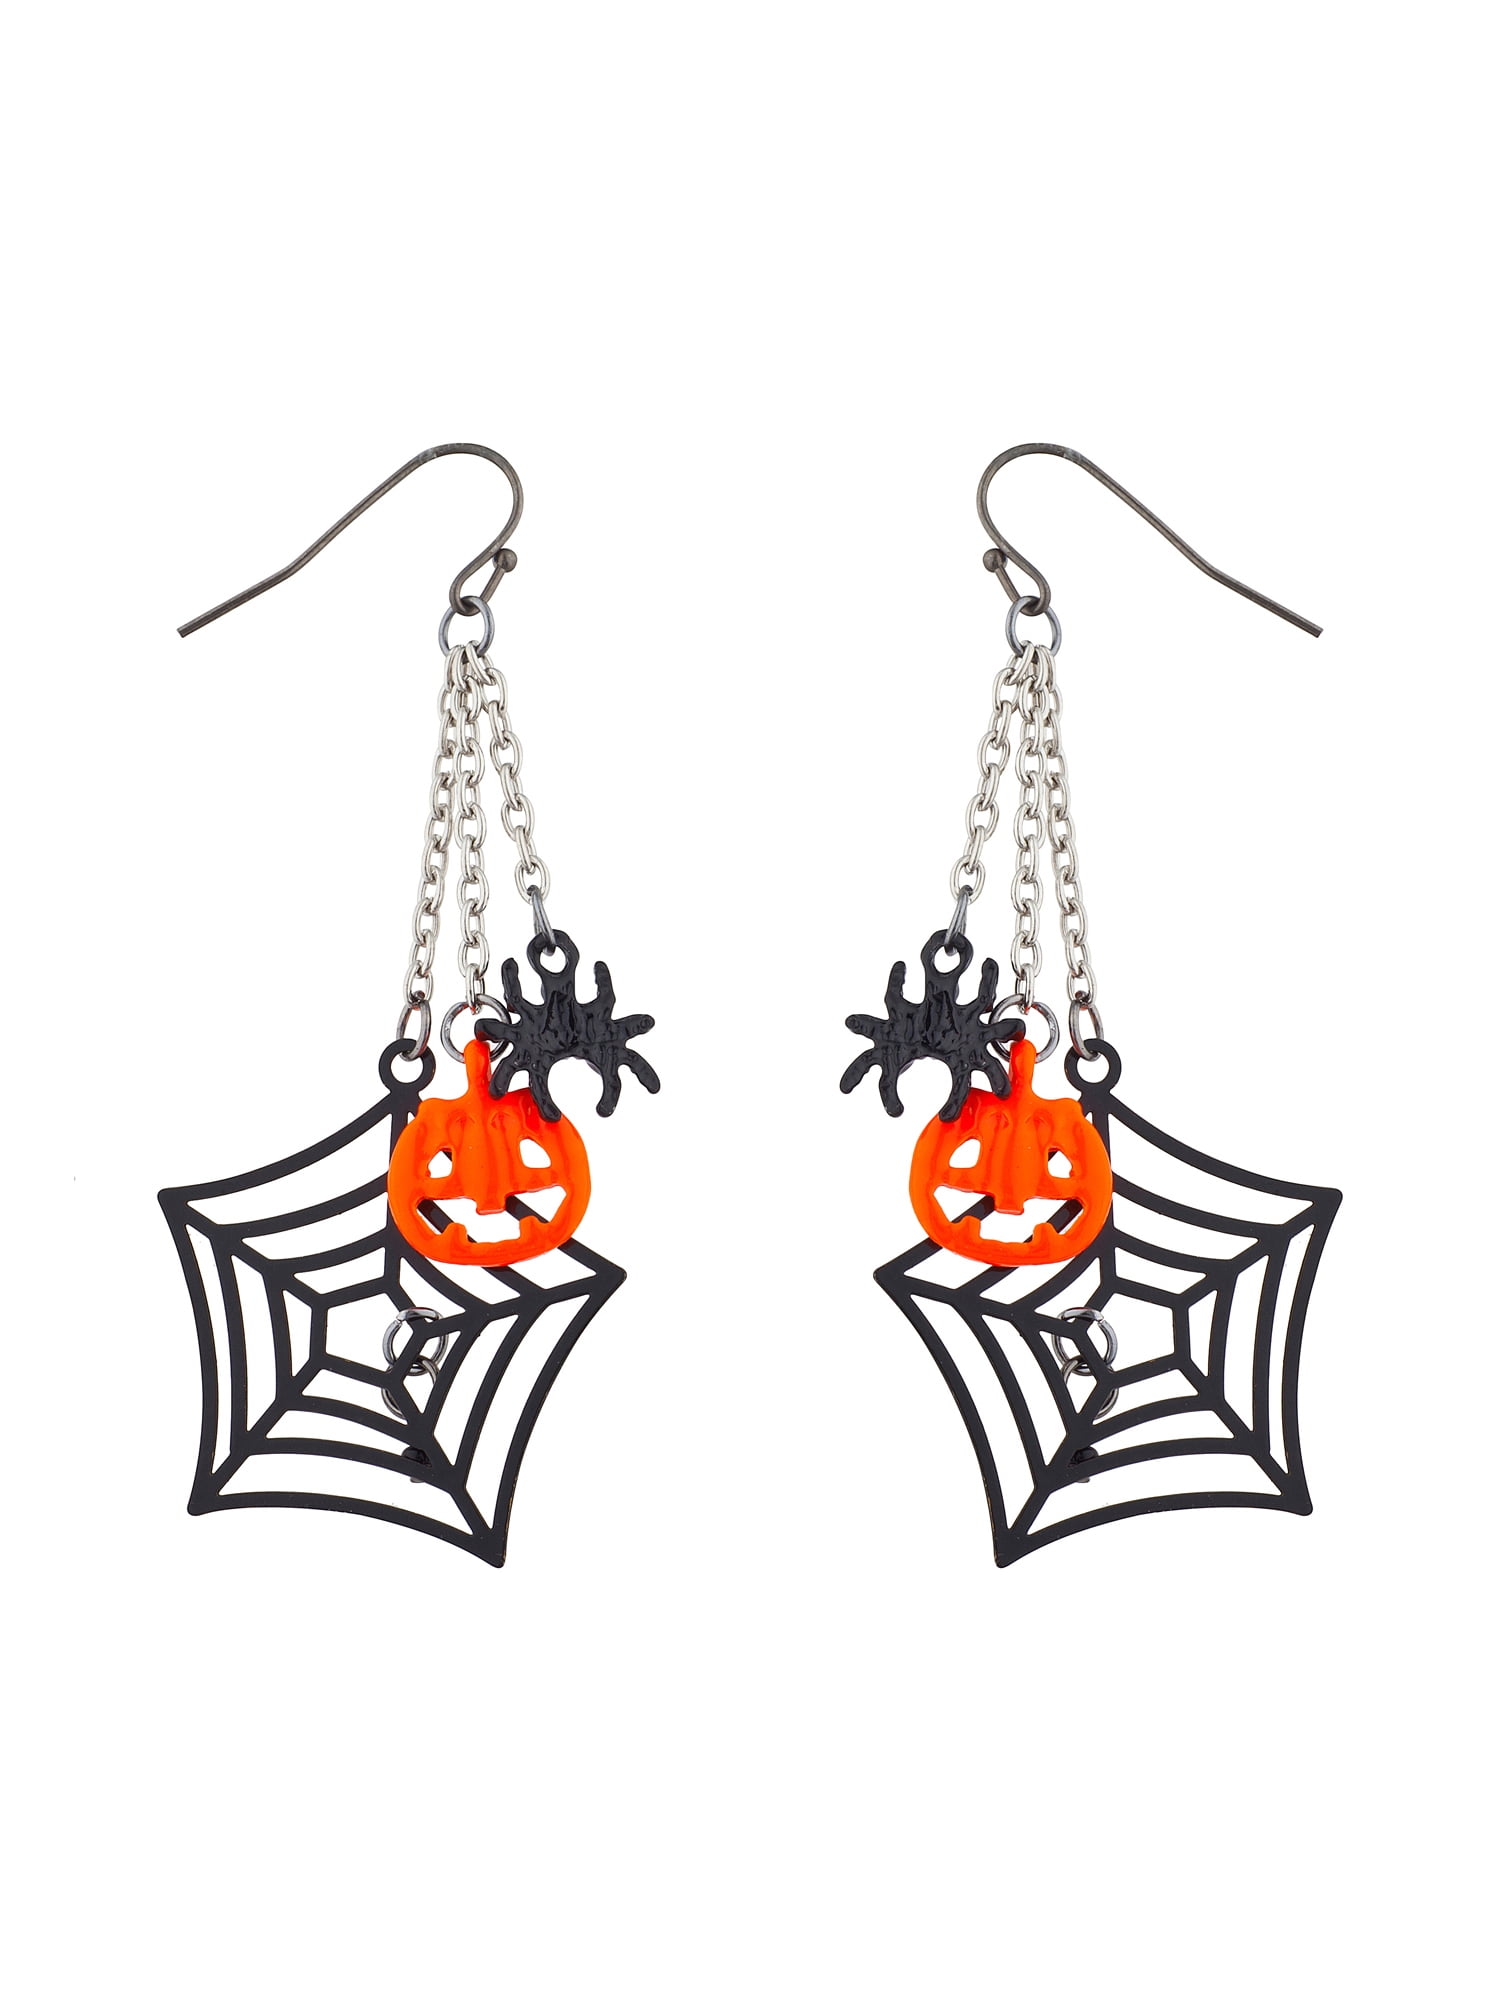 Lux Accessories Silver Tone Halloween Spider Web Chain Pumpkin Spider Earrings